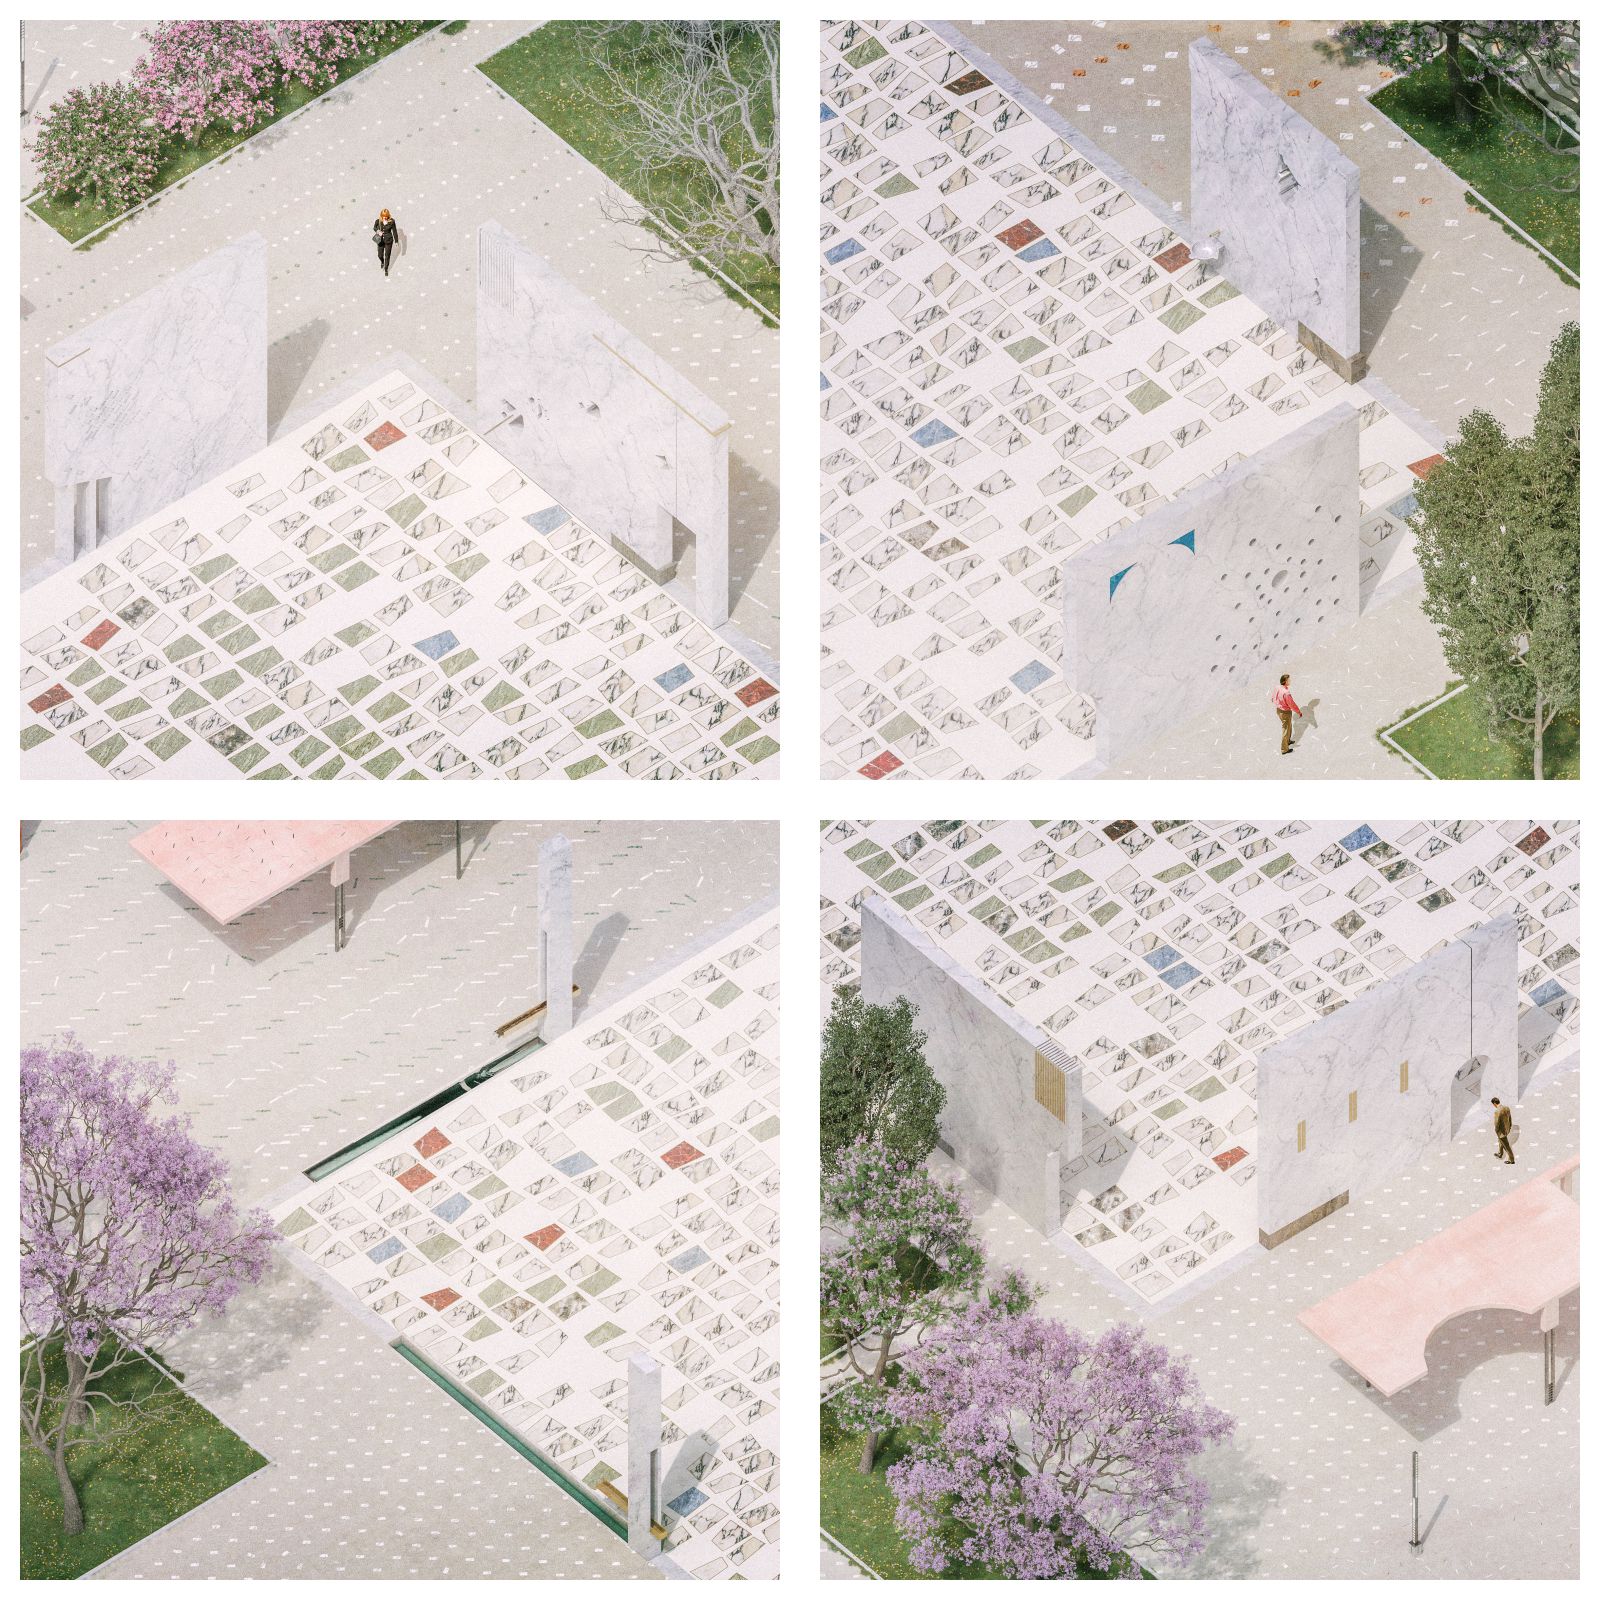 Archisearch LAMINA: object-e by D. Gourdoukis & K. Tryfonidou along with Ch. Tsaousidou, E. Papaspyrou, M. Nestora & G. Antoniadis win 2nd Prize at the open architectural competition 